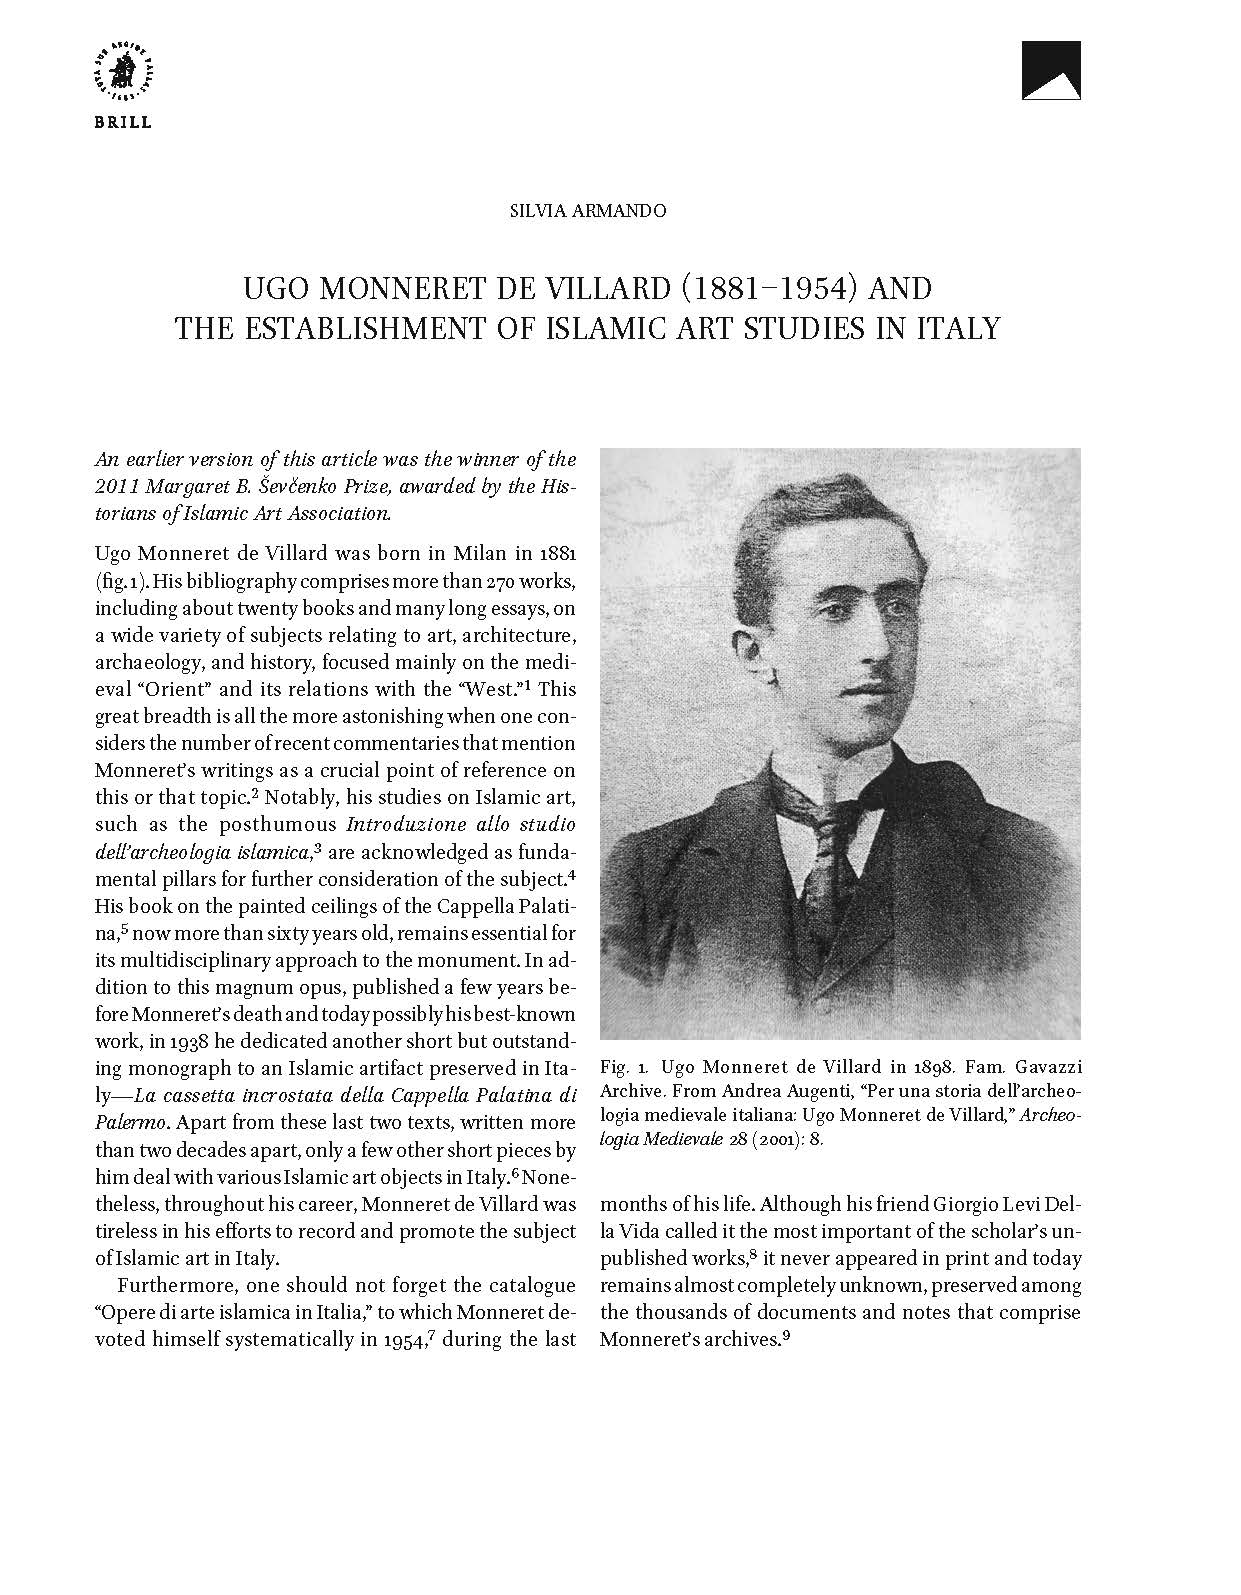 Ugo Monnaret de Villard (1881-1954) and the Establishment of Islamic Art Studies in Italy